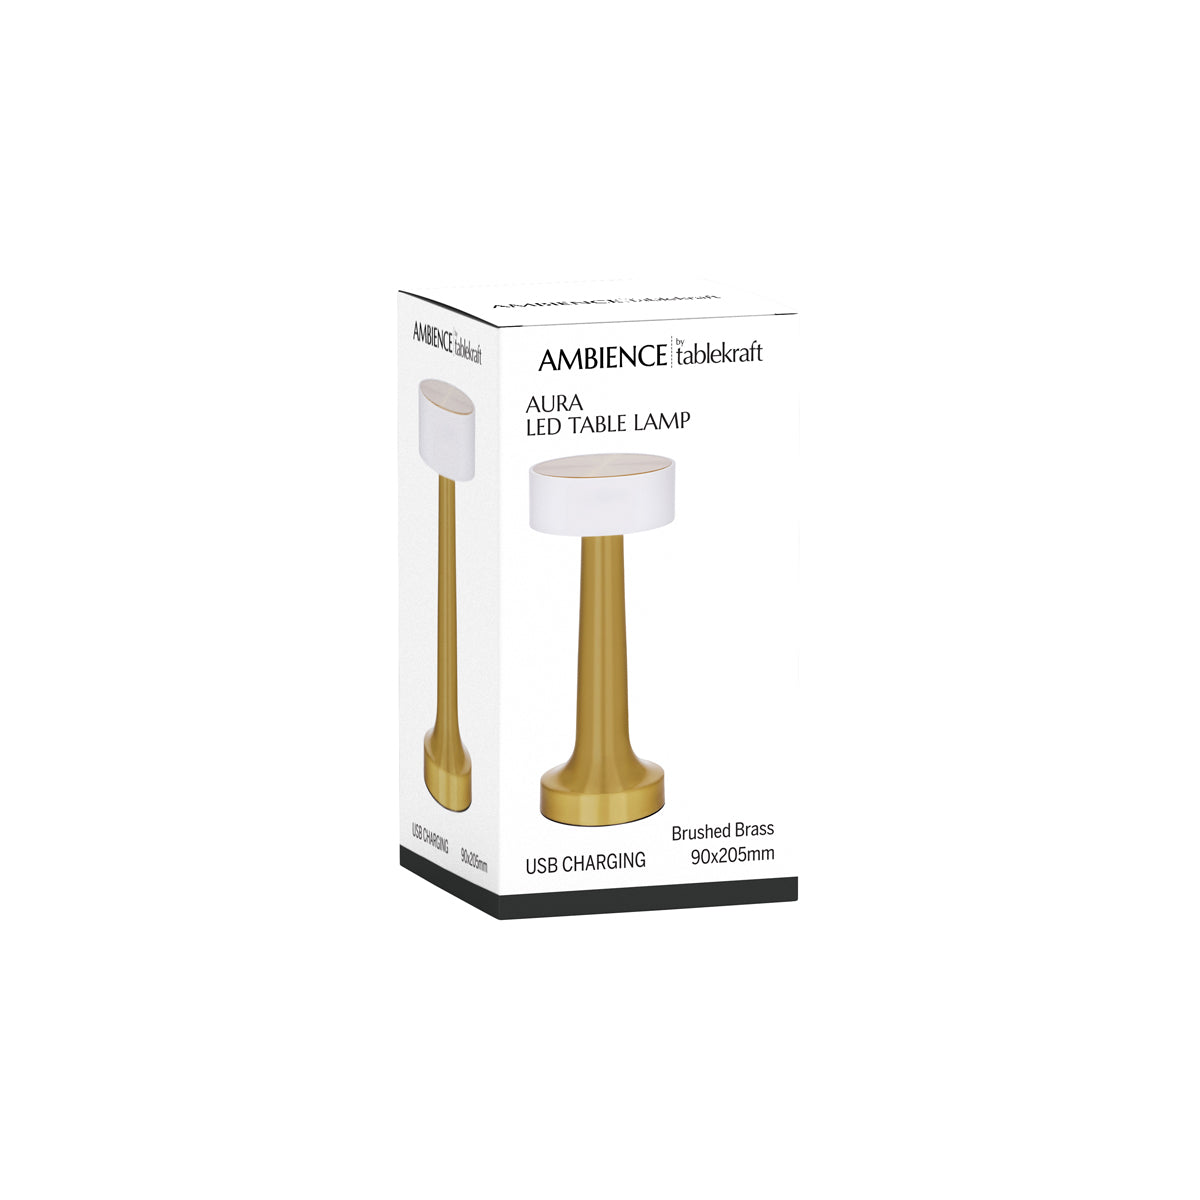 1000130 Tablekraft Ambience Aura Cordless LED Table Lamp Brushed Brass 90x205mm Tomkin Australia Hospitality Supplies